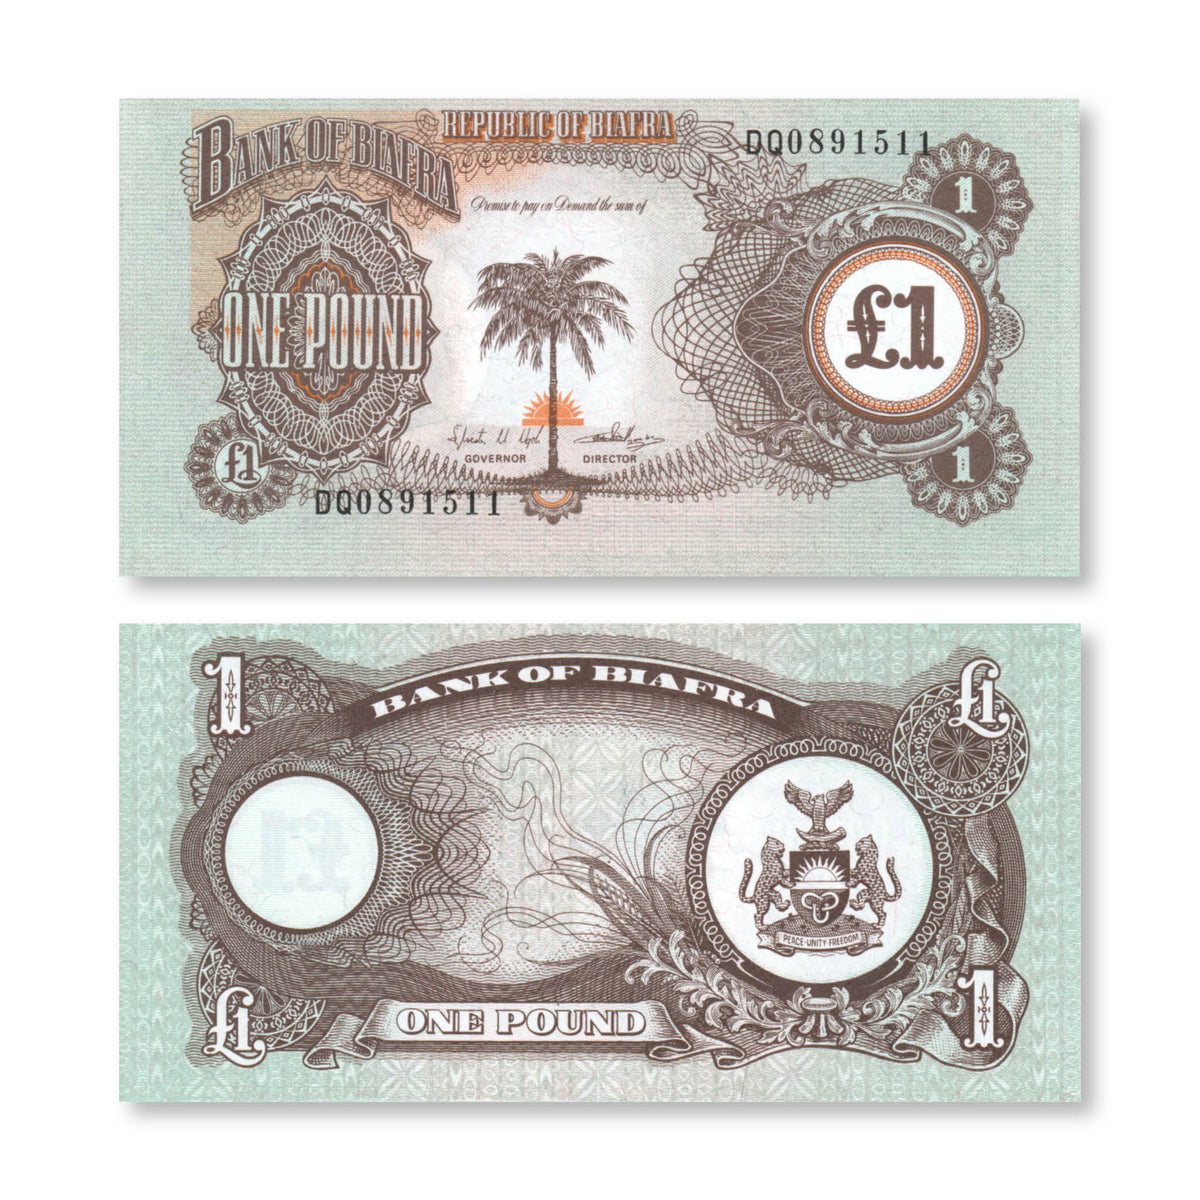 Biafra 1 Pound, 1969, B105a, P5a, UNC - Robert's World Money - World Banknotes